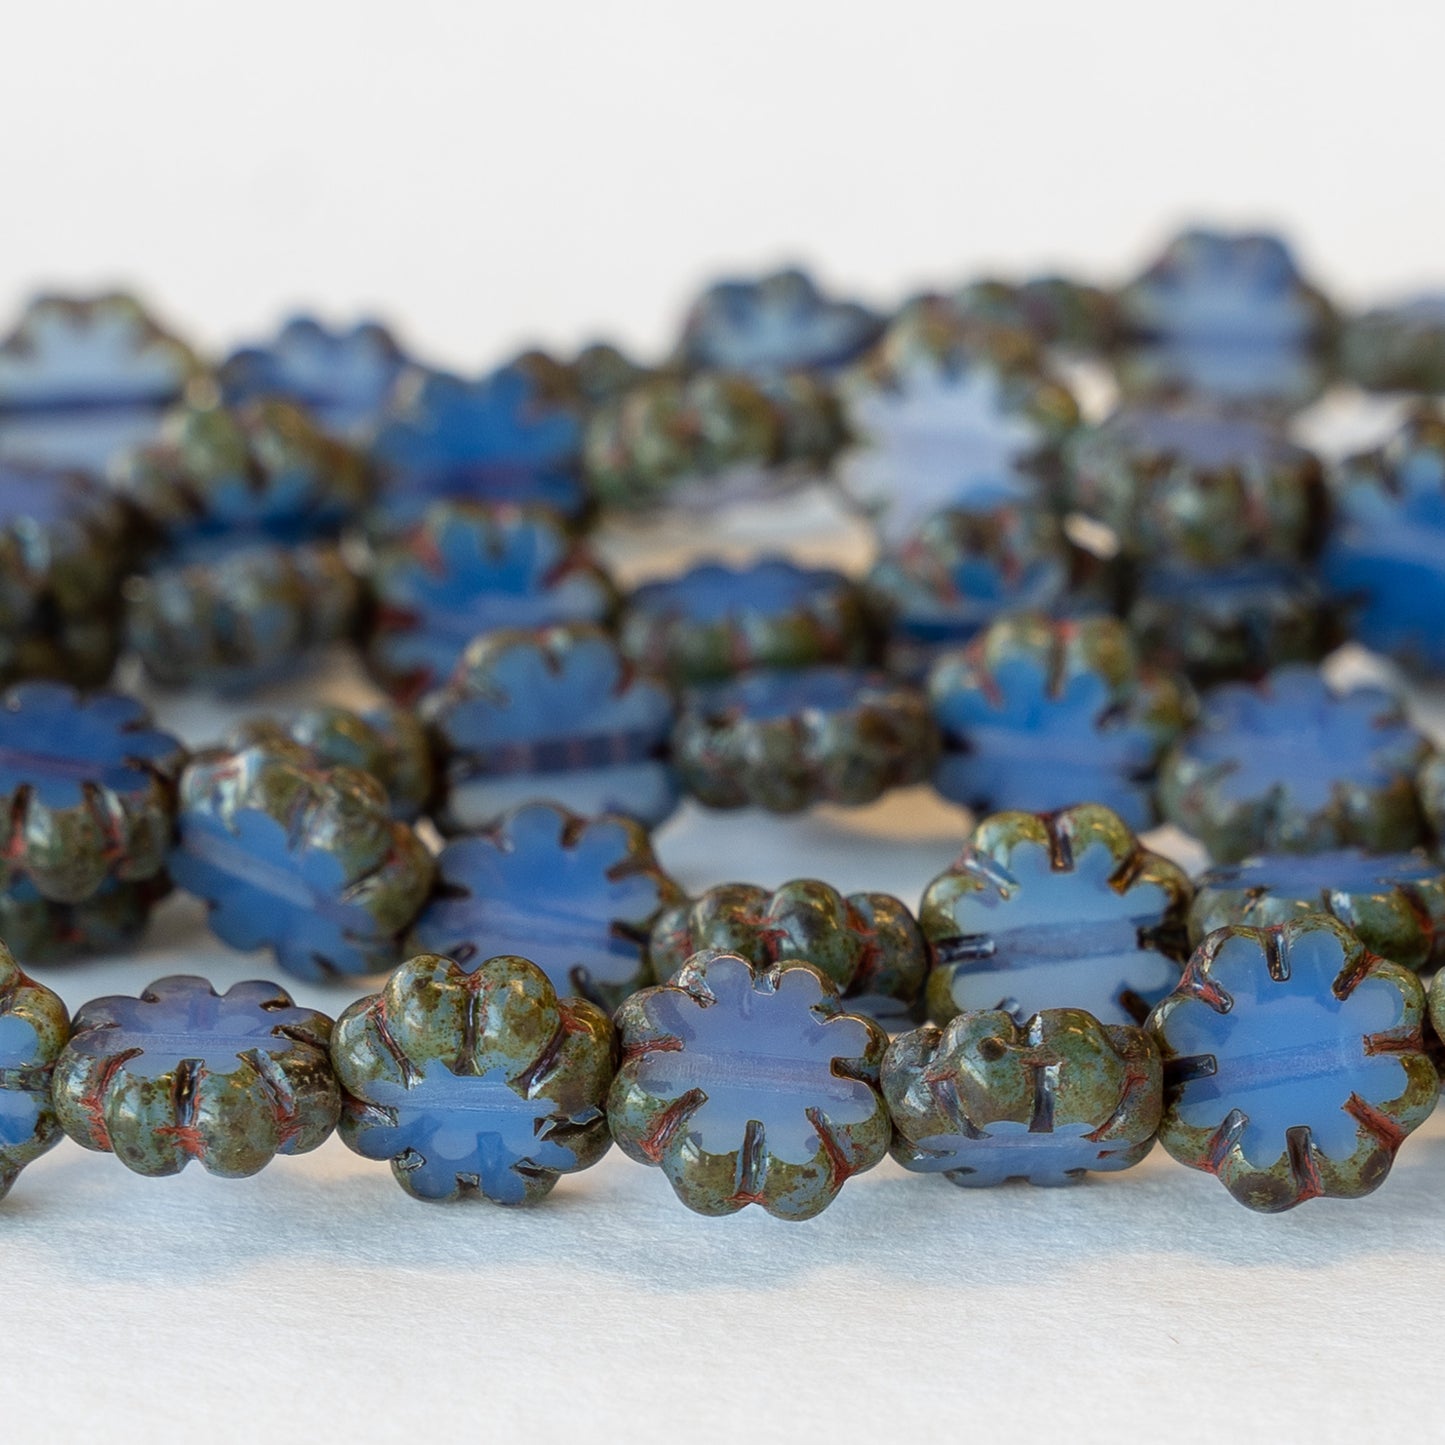 9mm Glass Flower Beads - Cornflower Blue Picasso Beads - 15 Beads